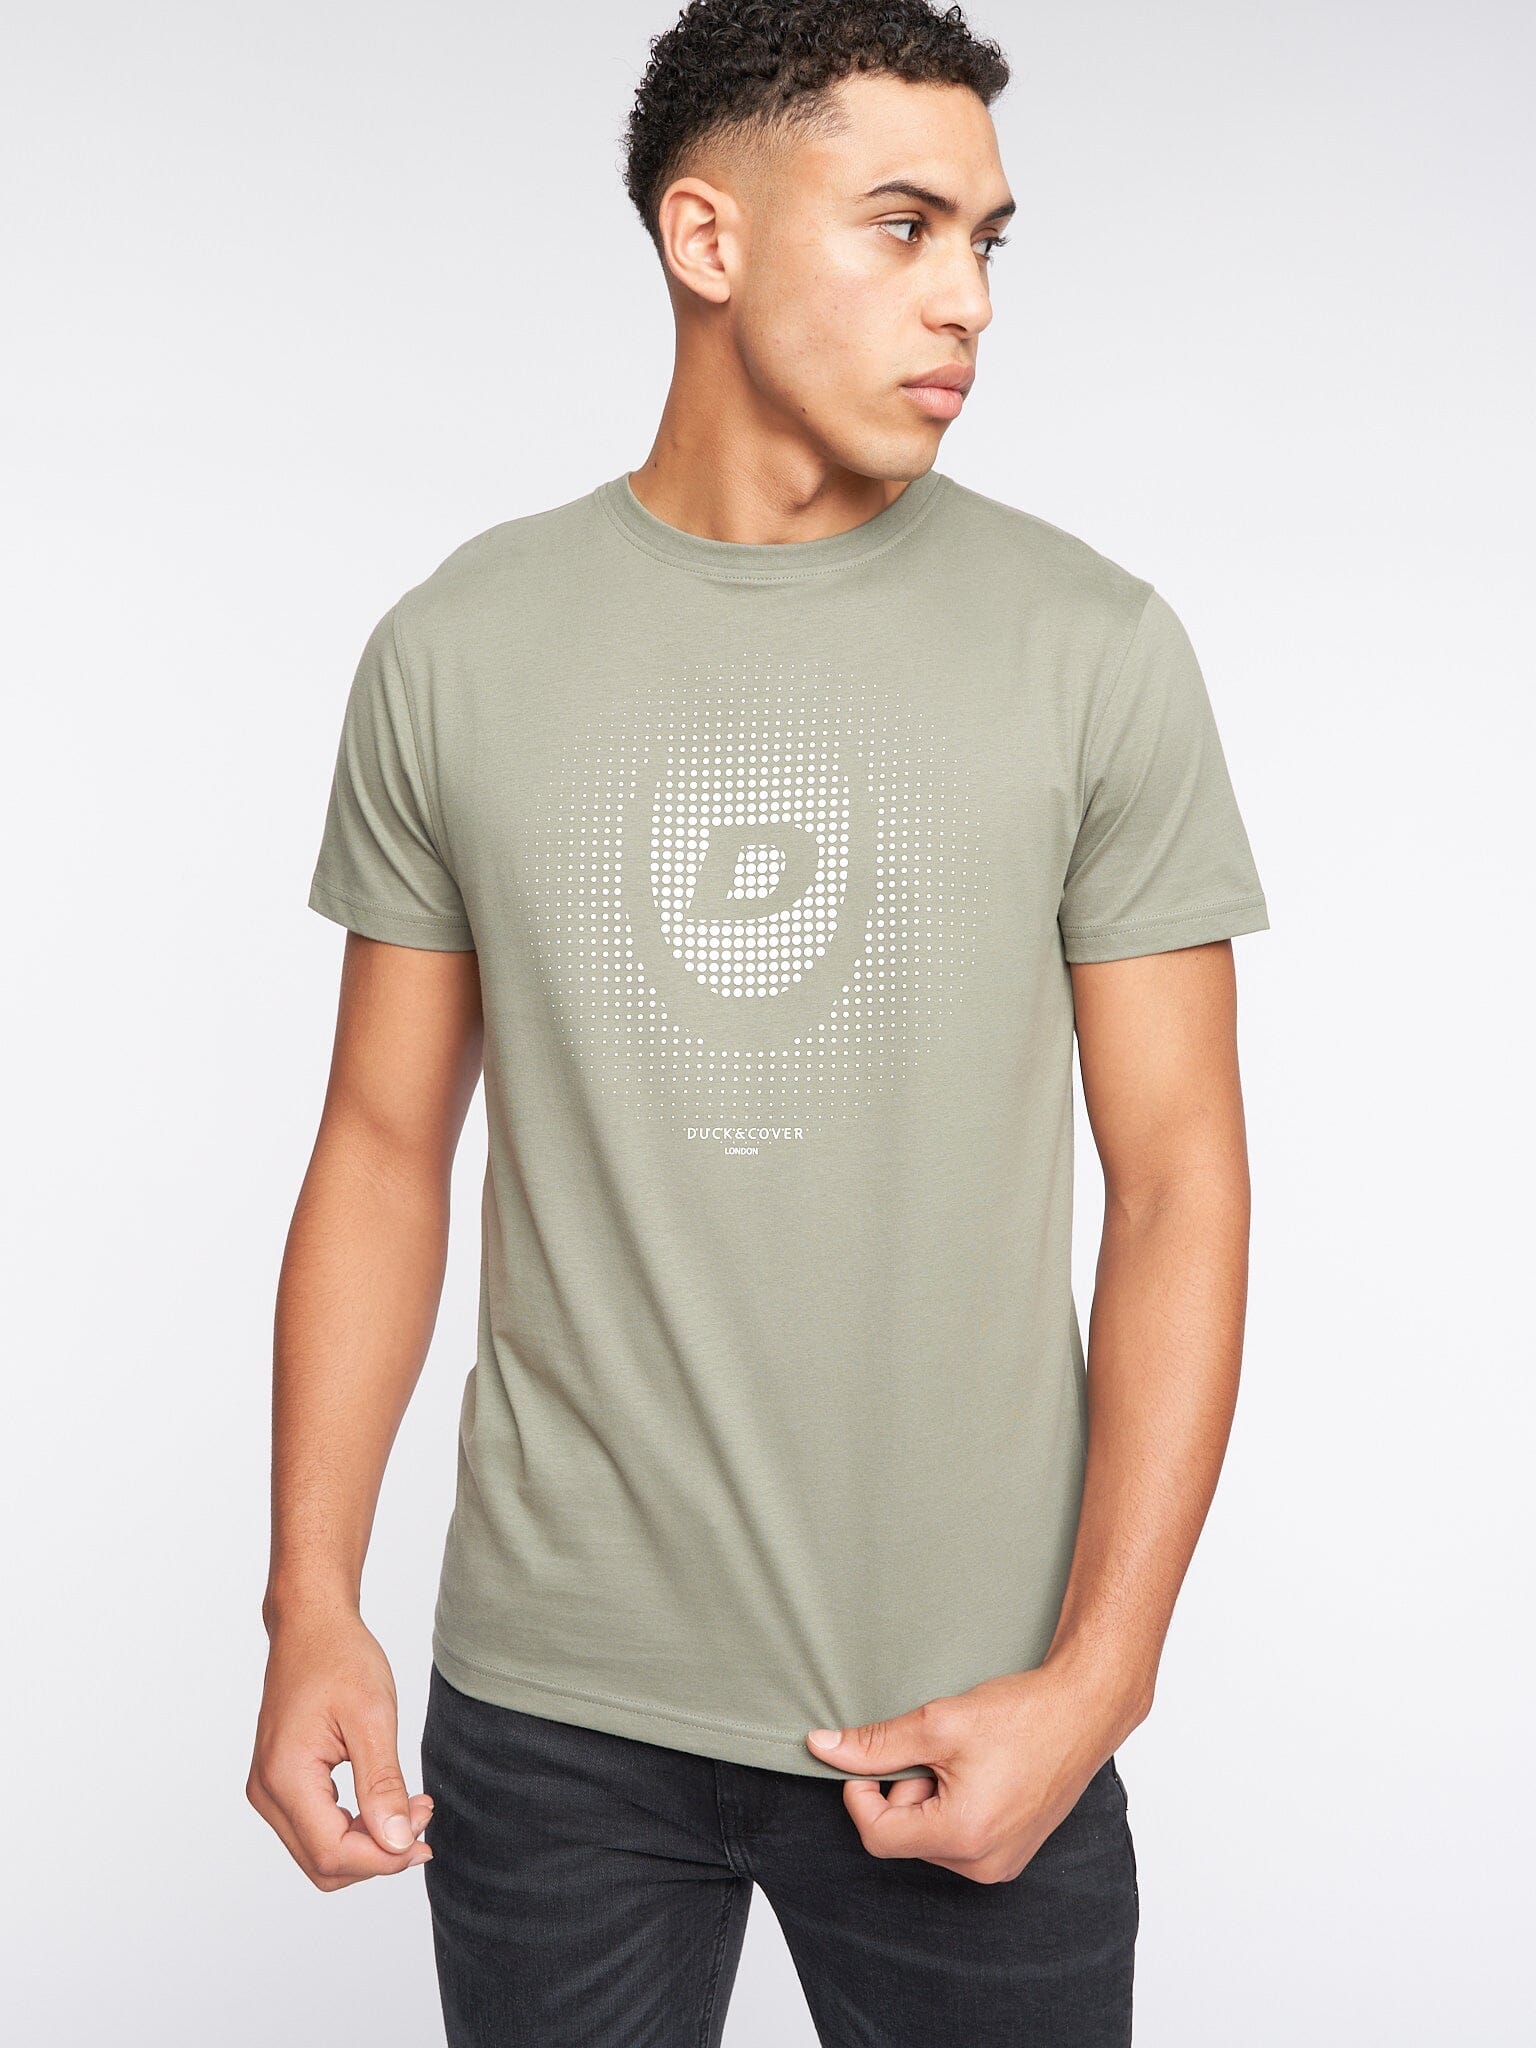 Pulsea T-Shirt Sage